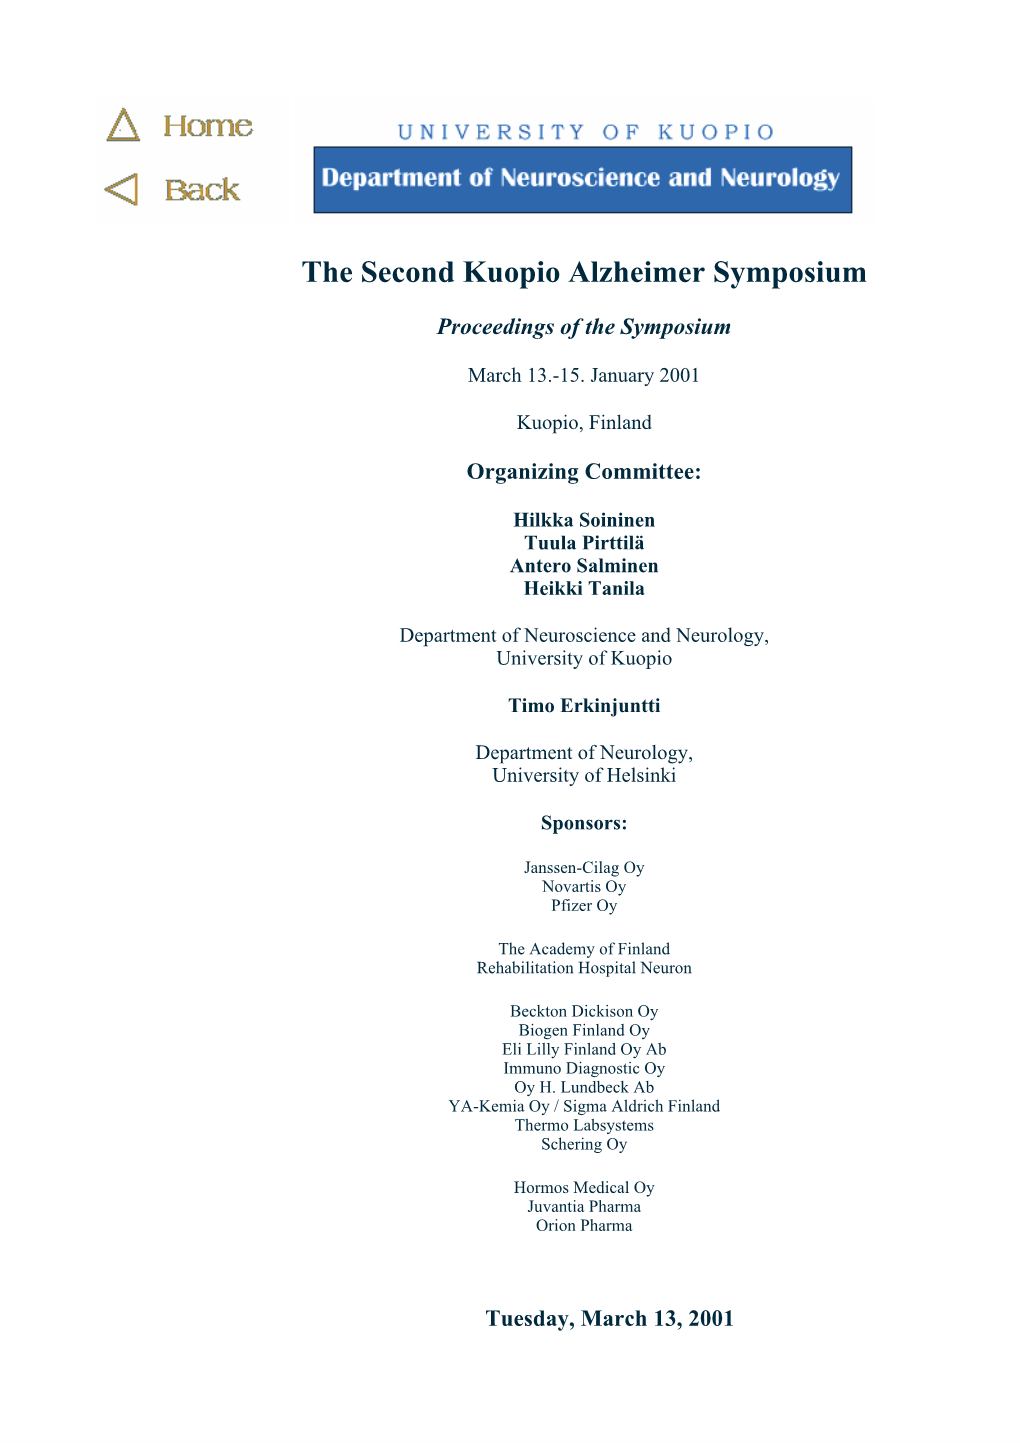 The Second Kuopio Alzheimer Symposium